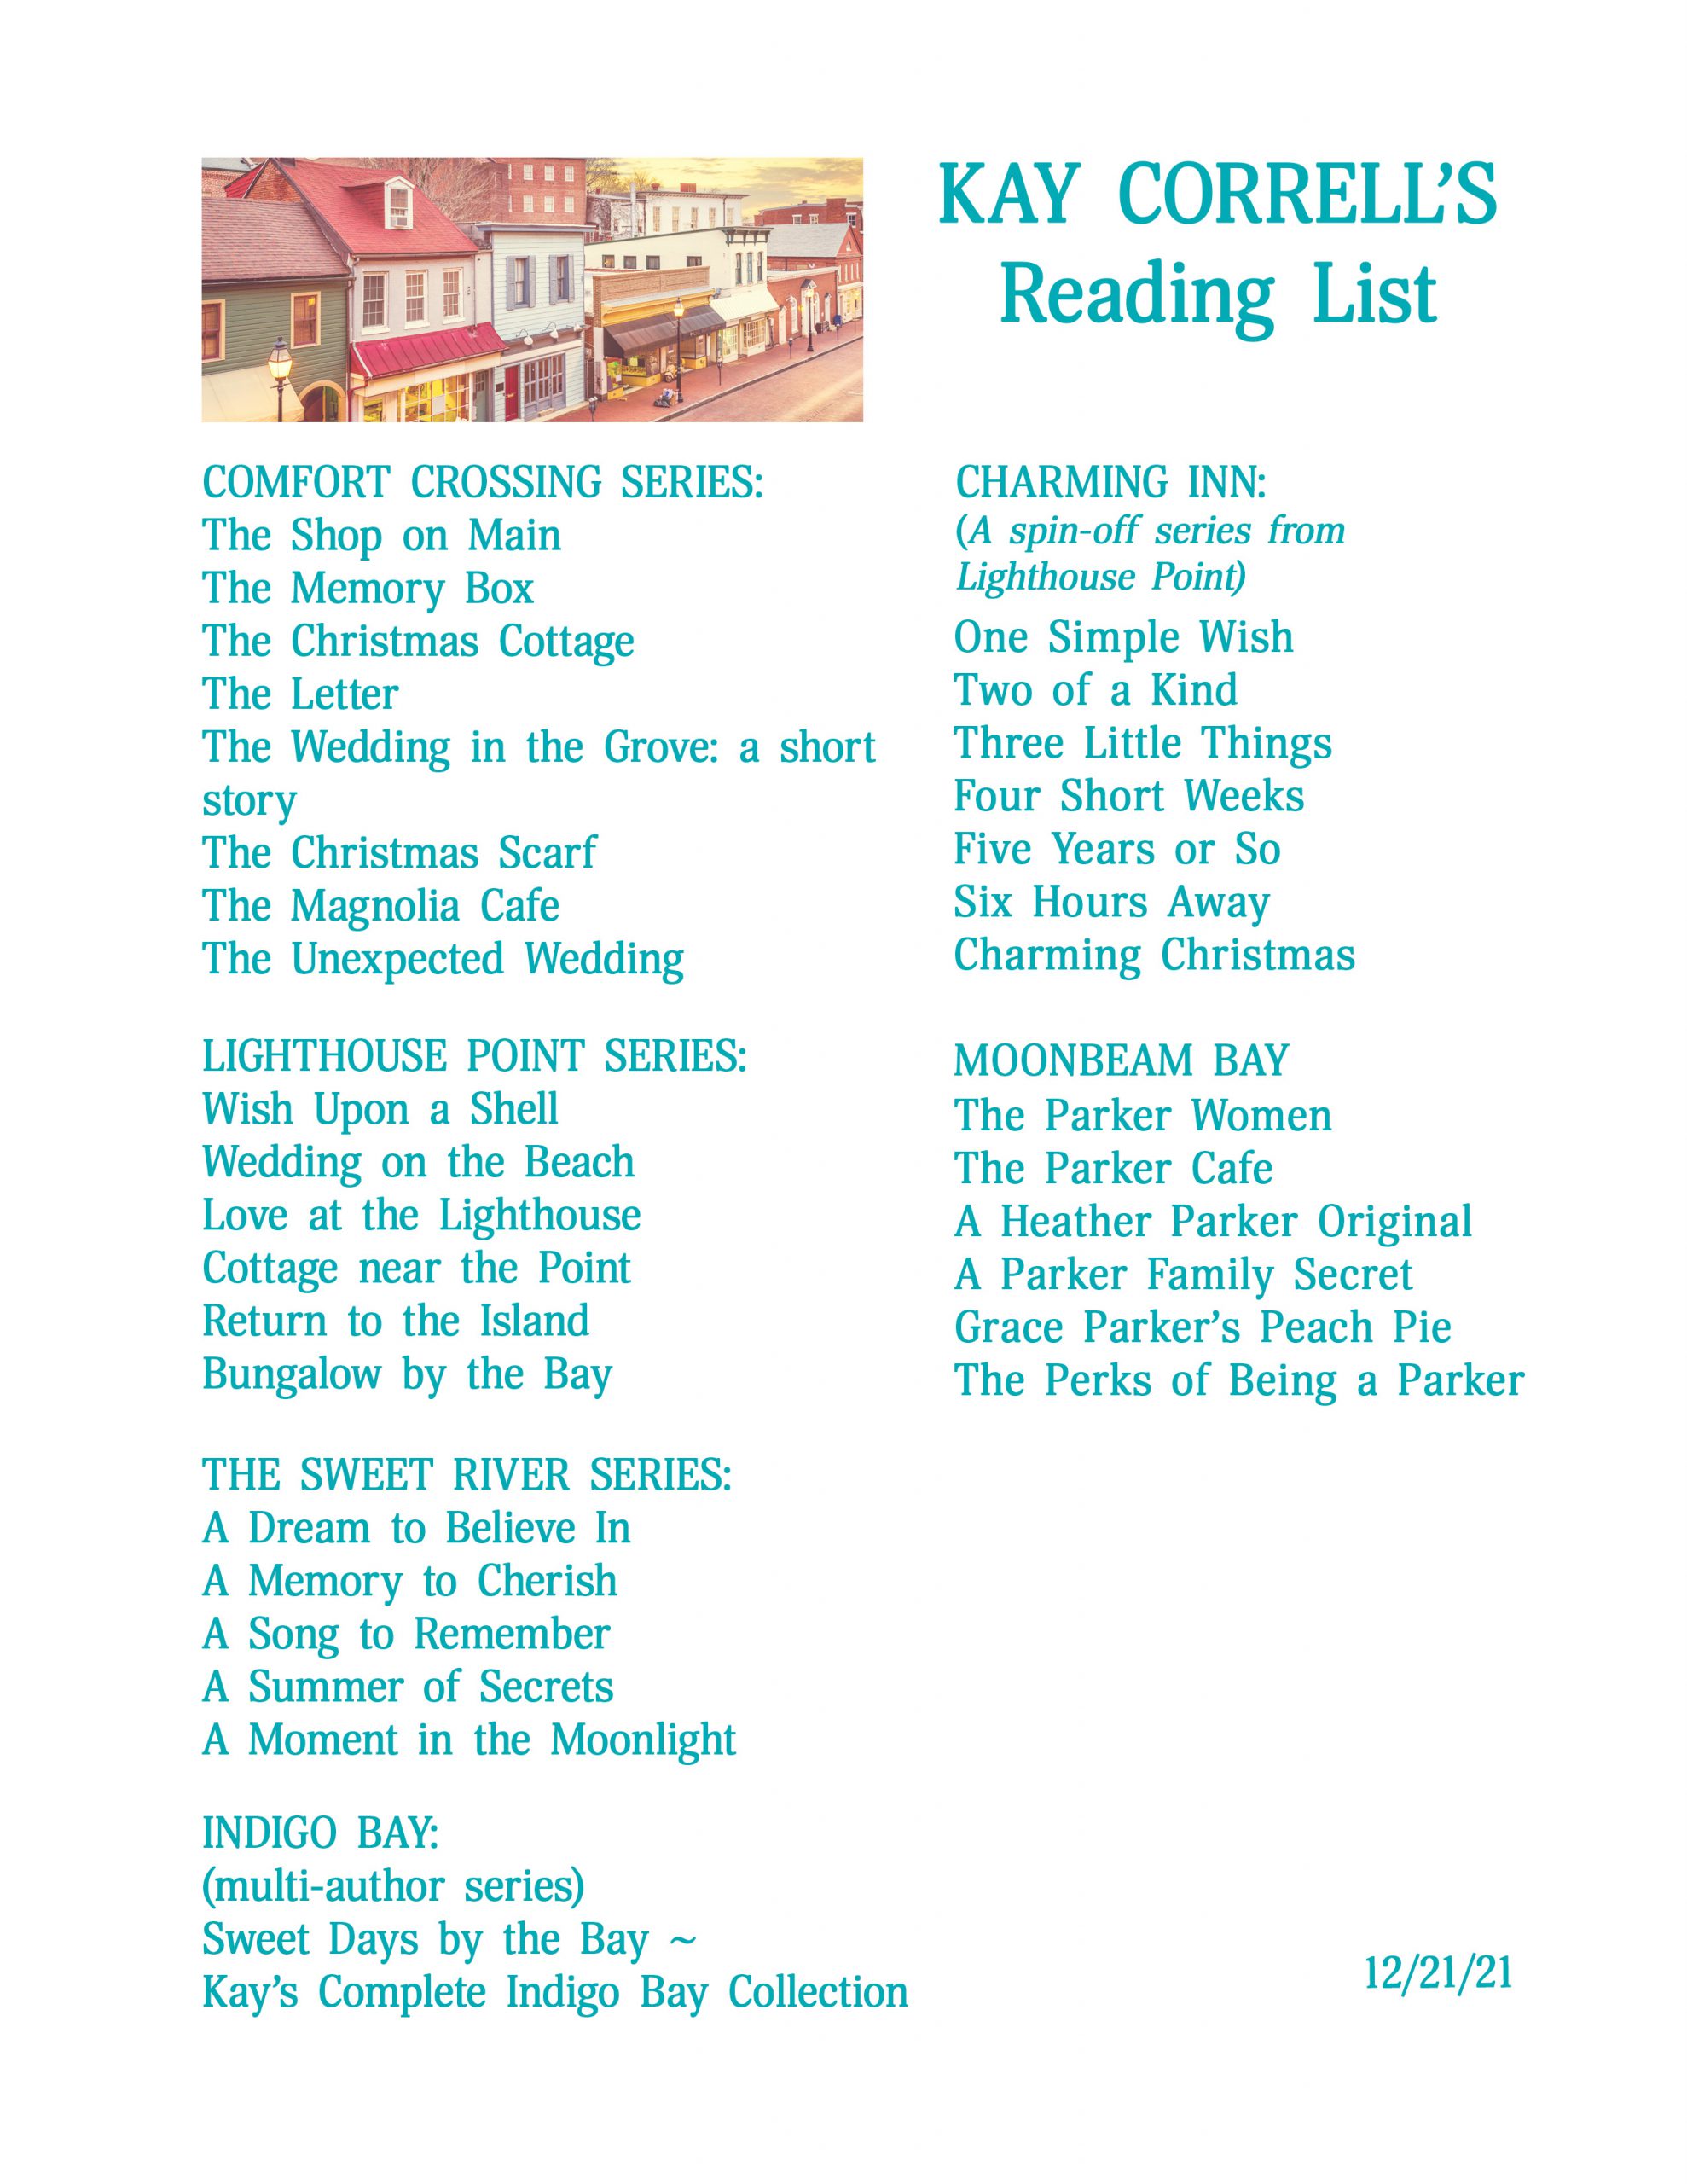 Reading Order List